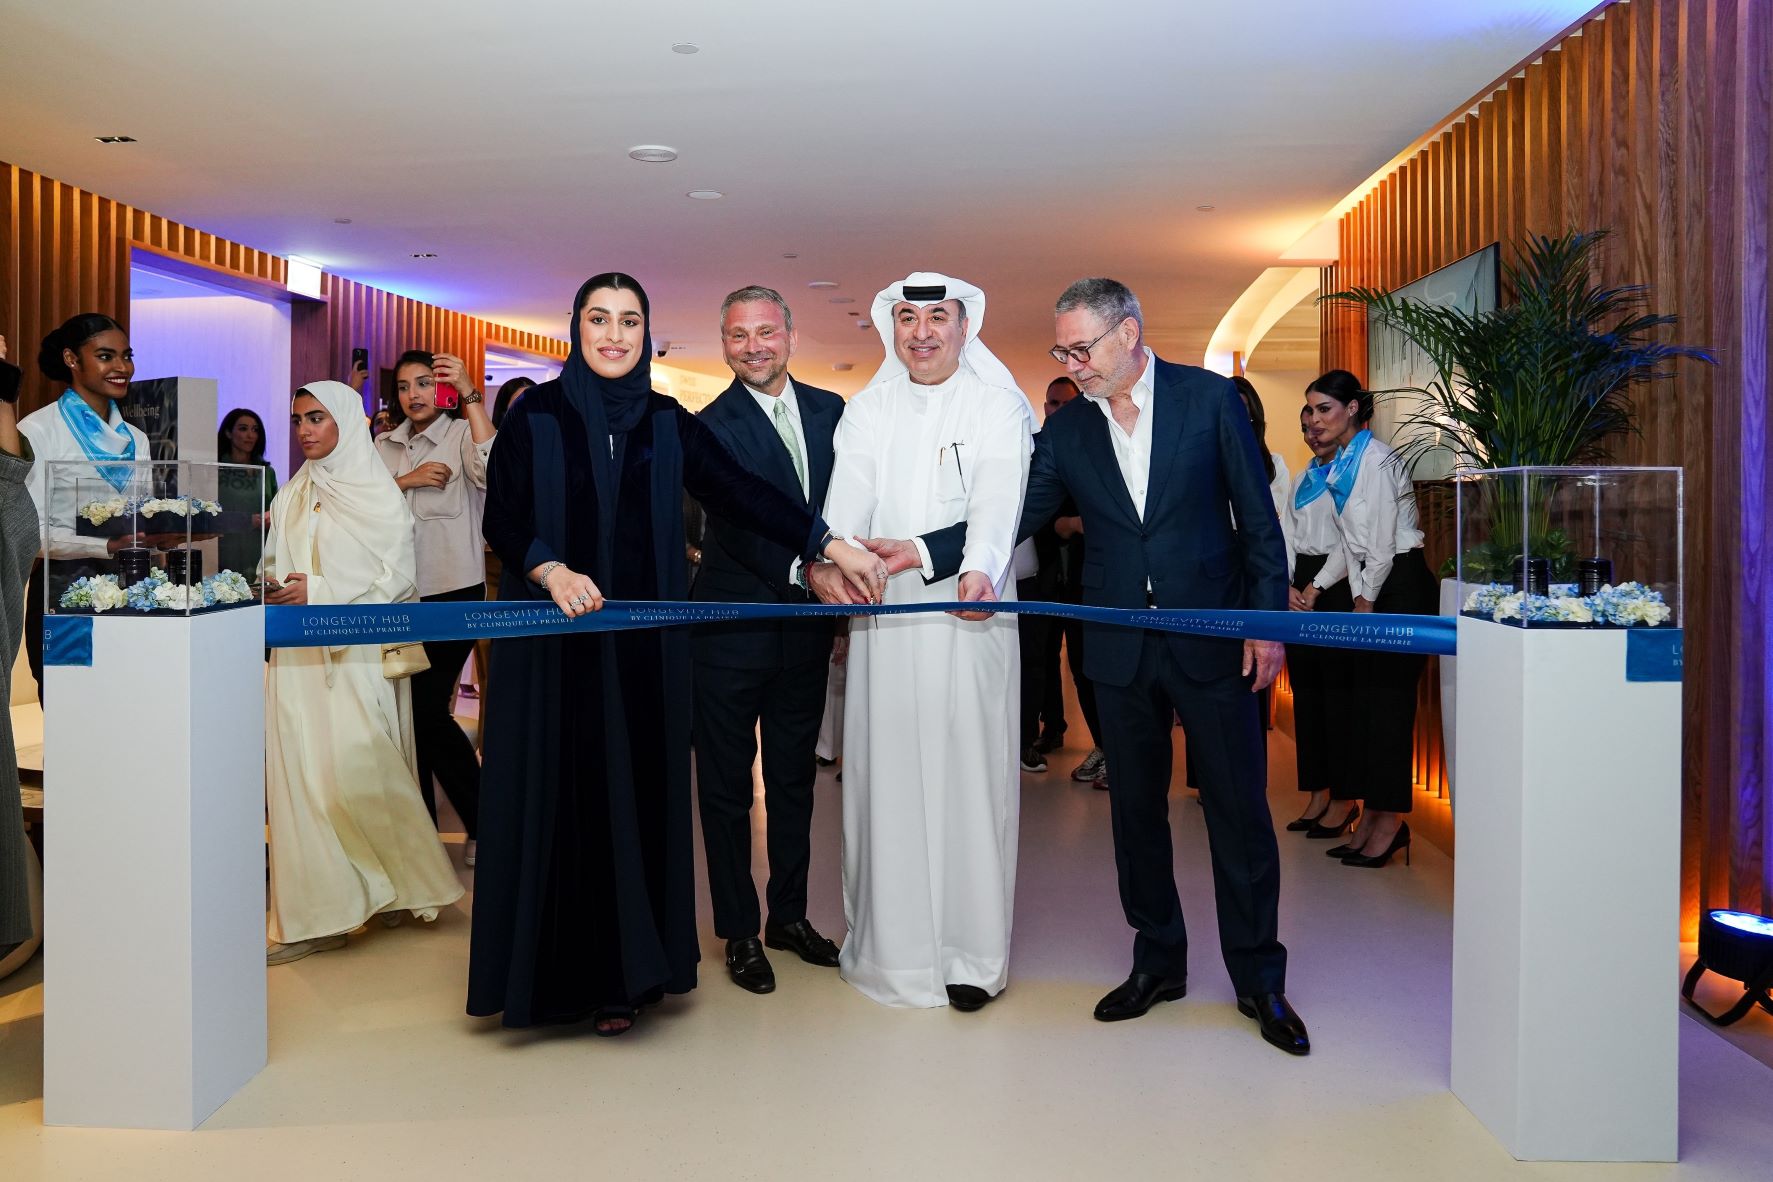 Alfardan Hospitality announces the launch of Clinique La Prairie’s new Longevity Hub at The St. Regis Marsa Arabia Island, The Pearl – Qatar